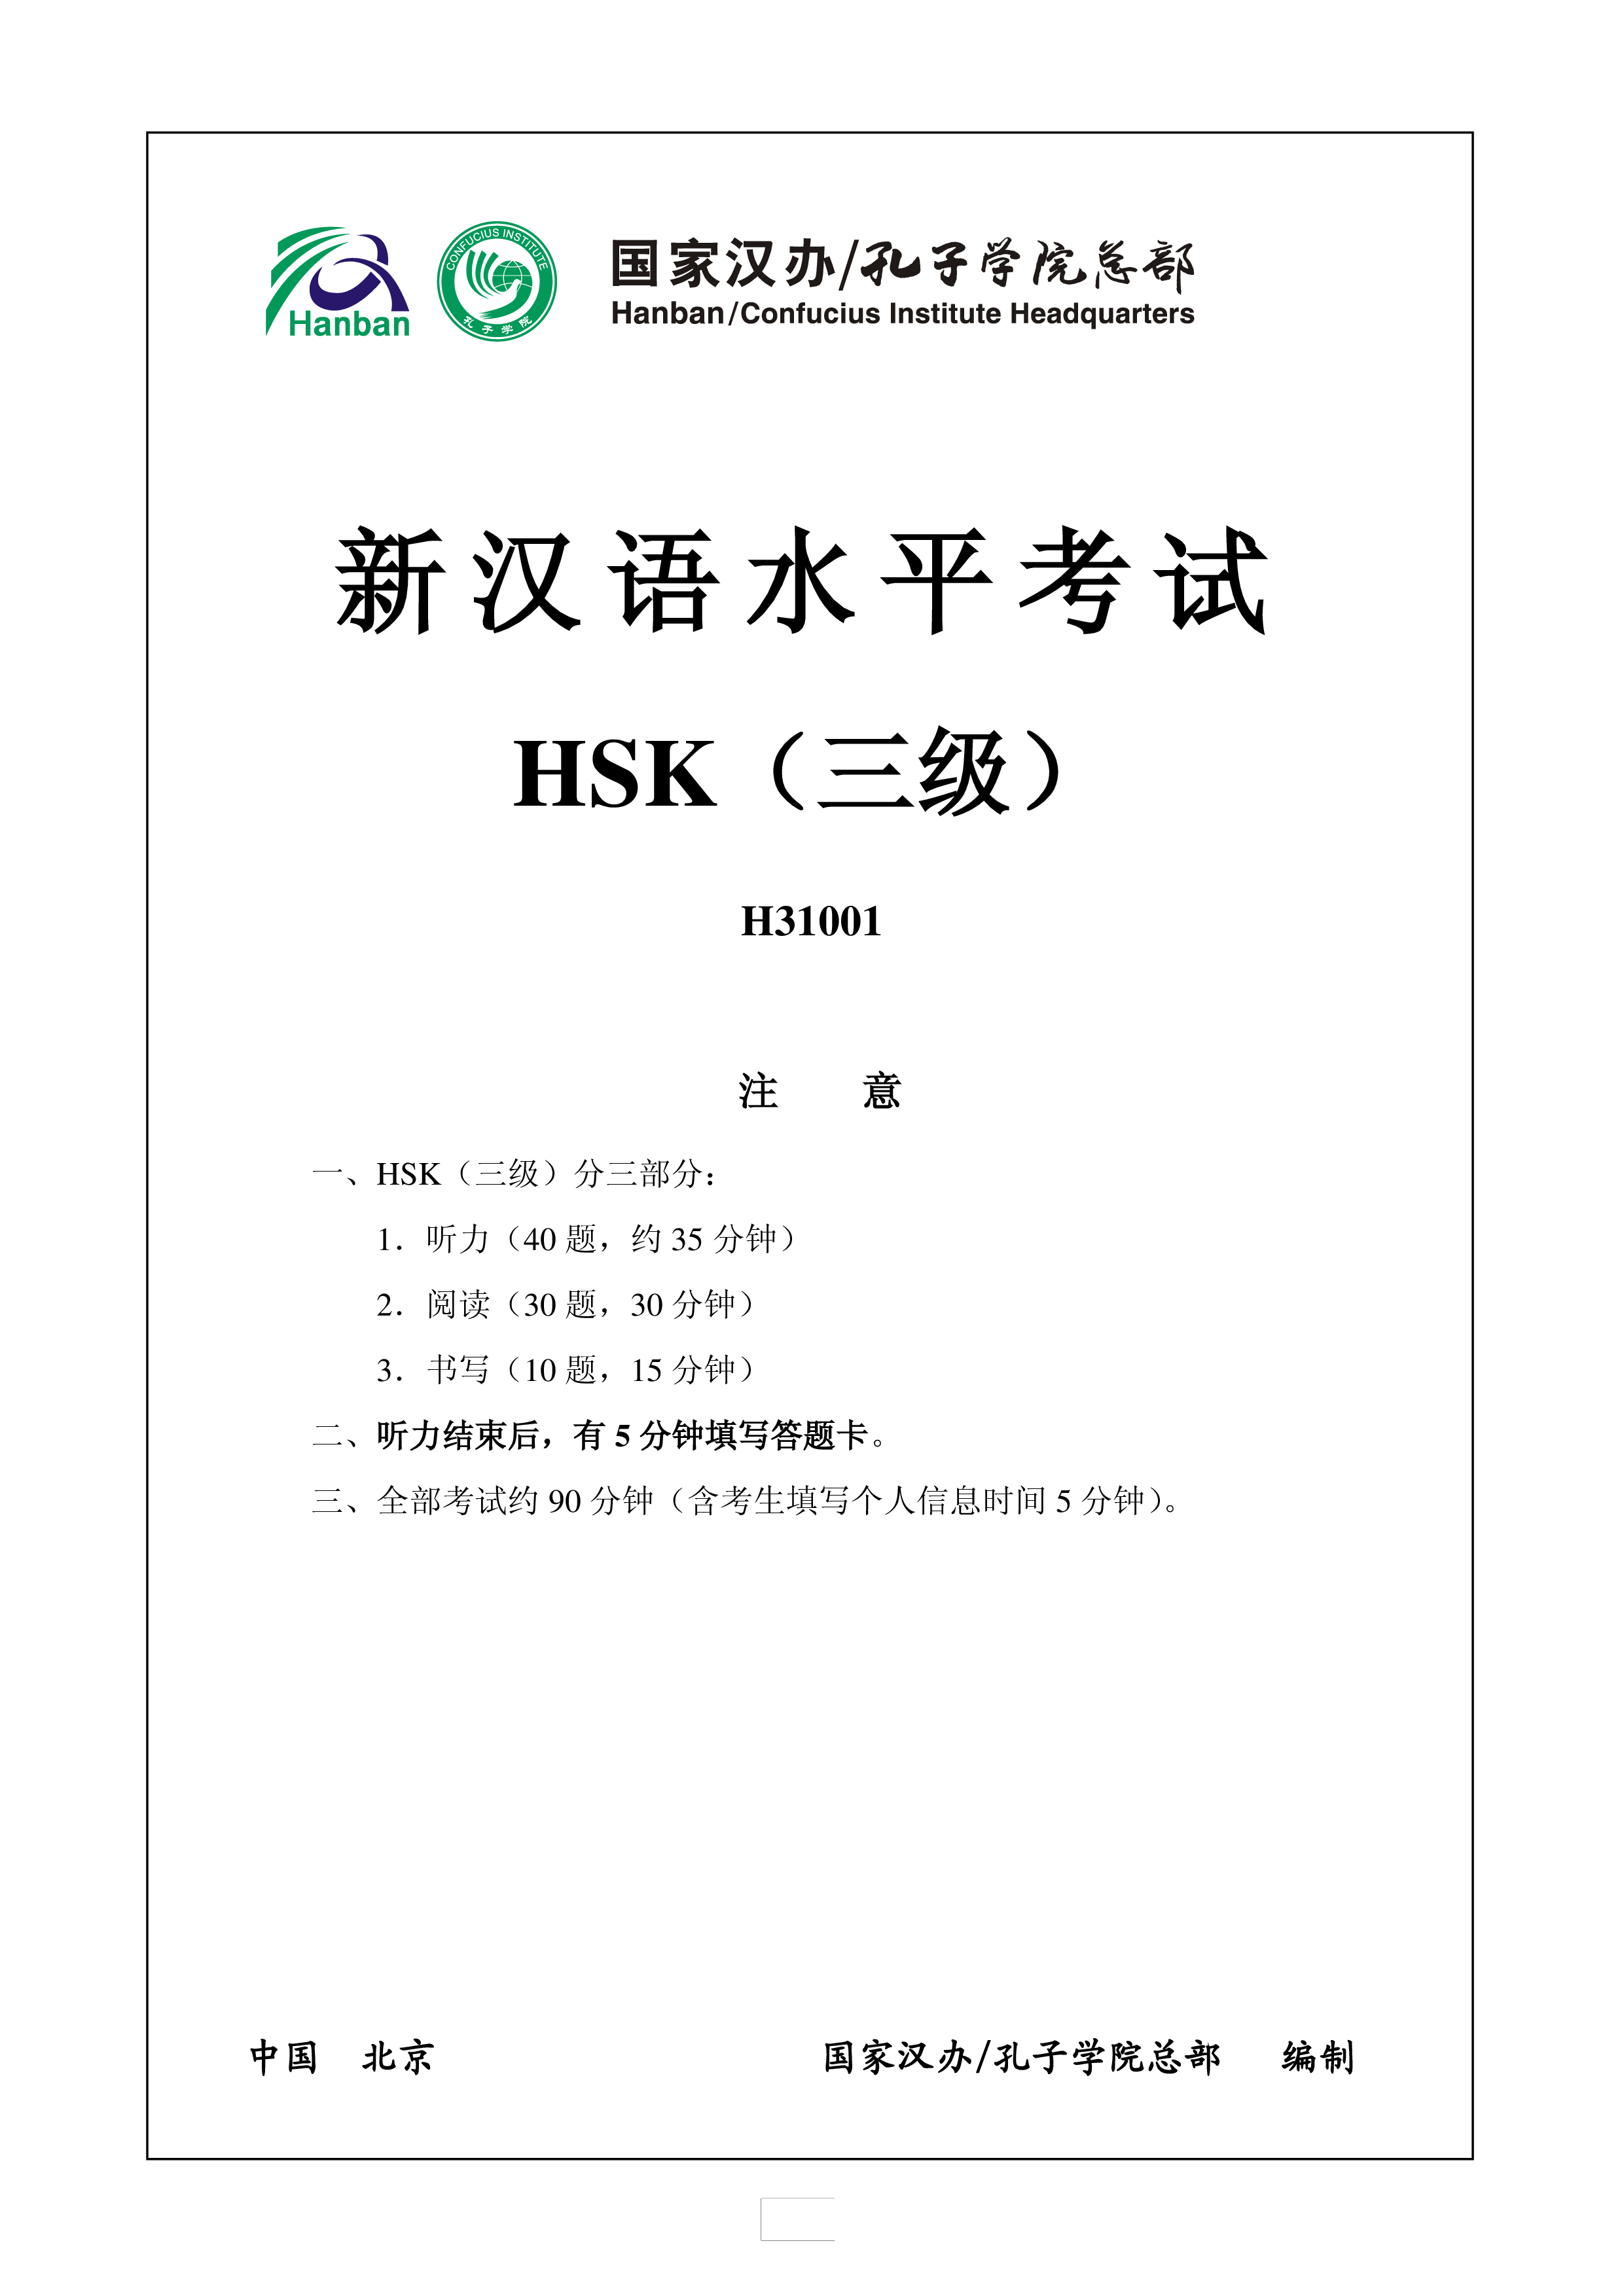 HSK新汉语水平三级考试 H31001模拟真题含答案 main image